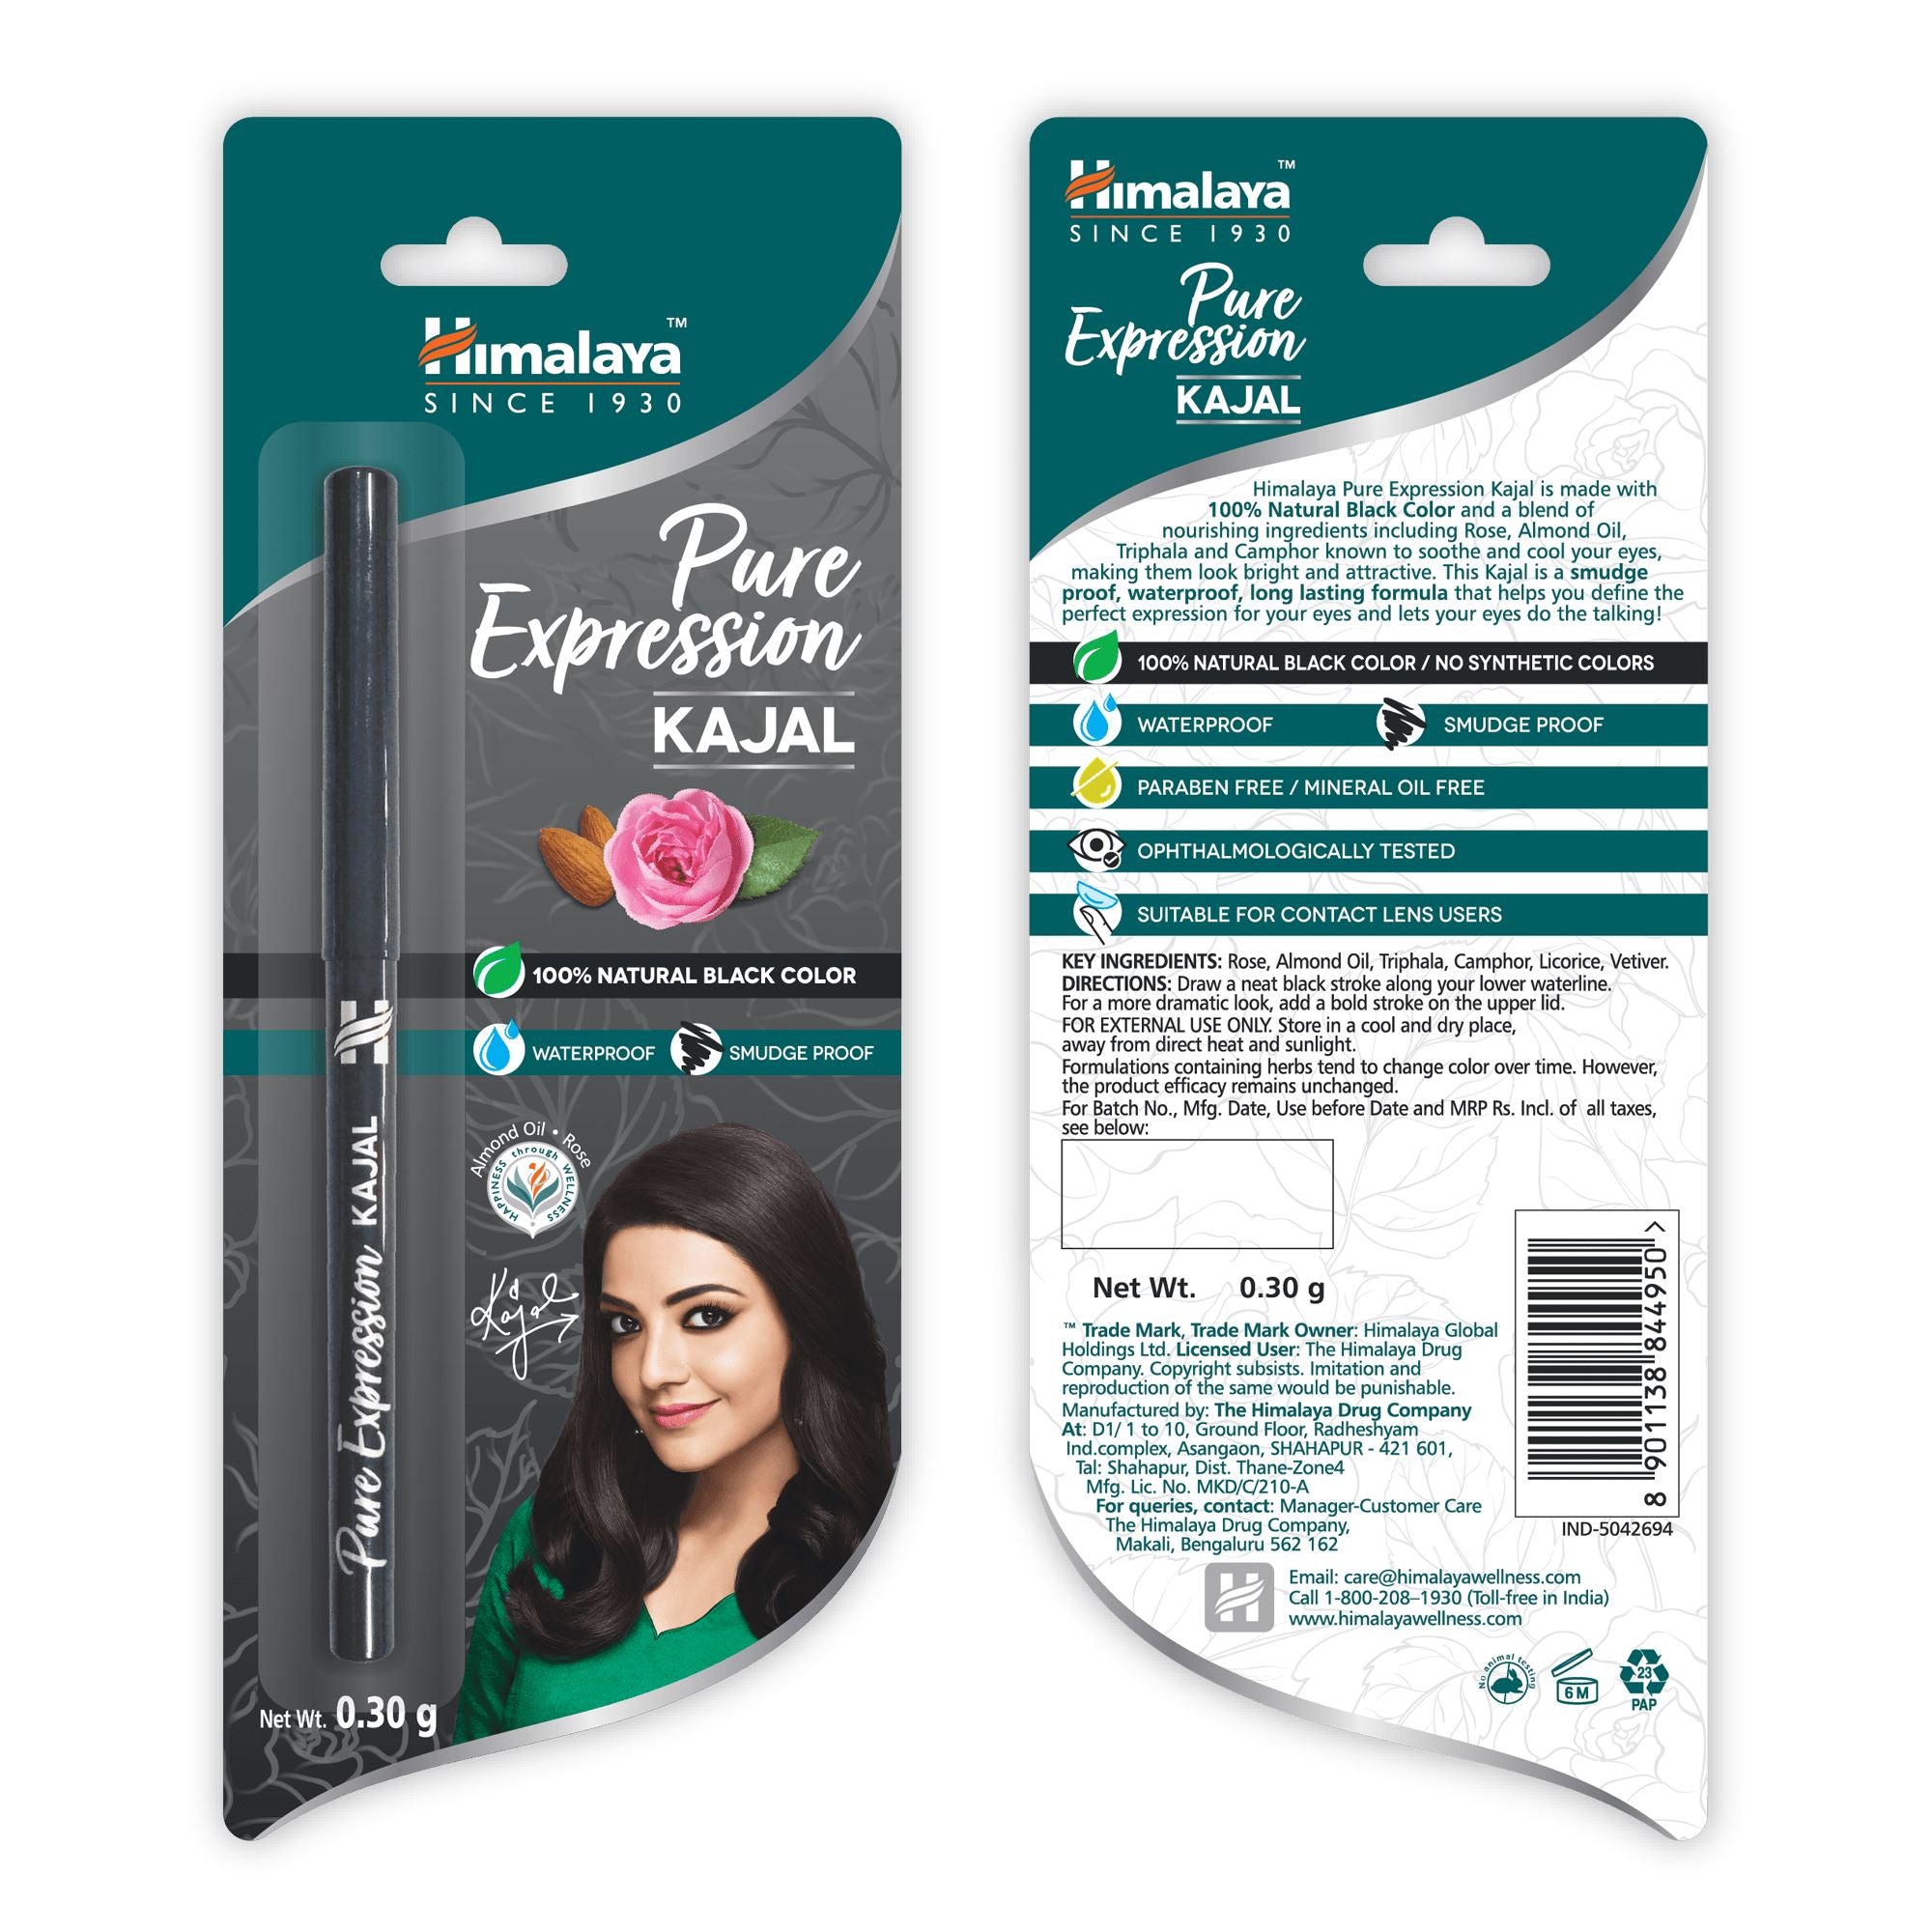 Himalaya Pure Expression Kajal - Product Details